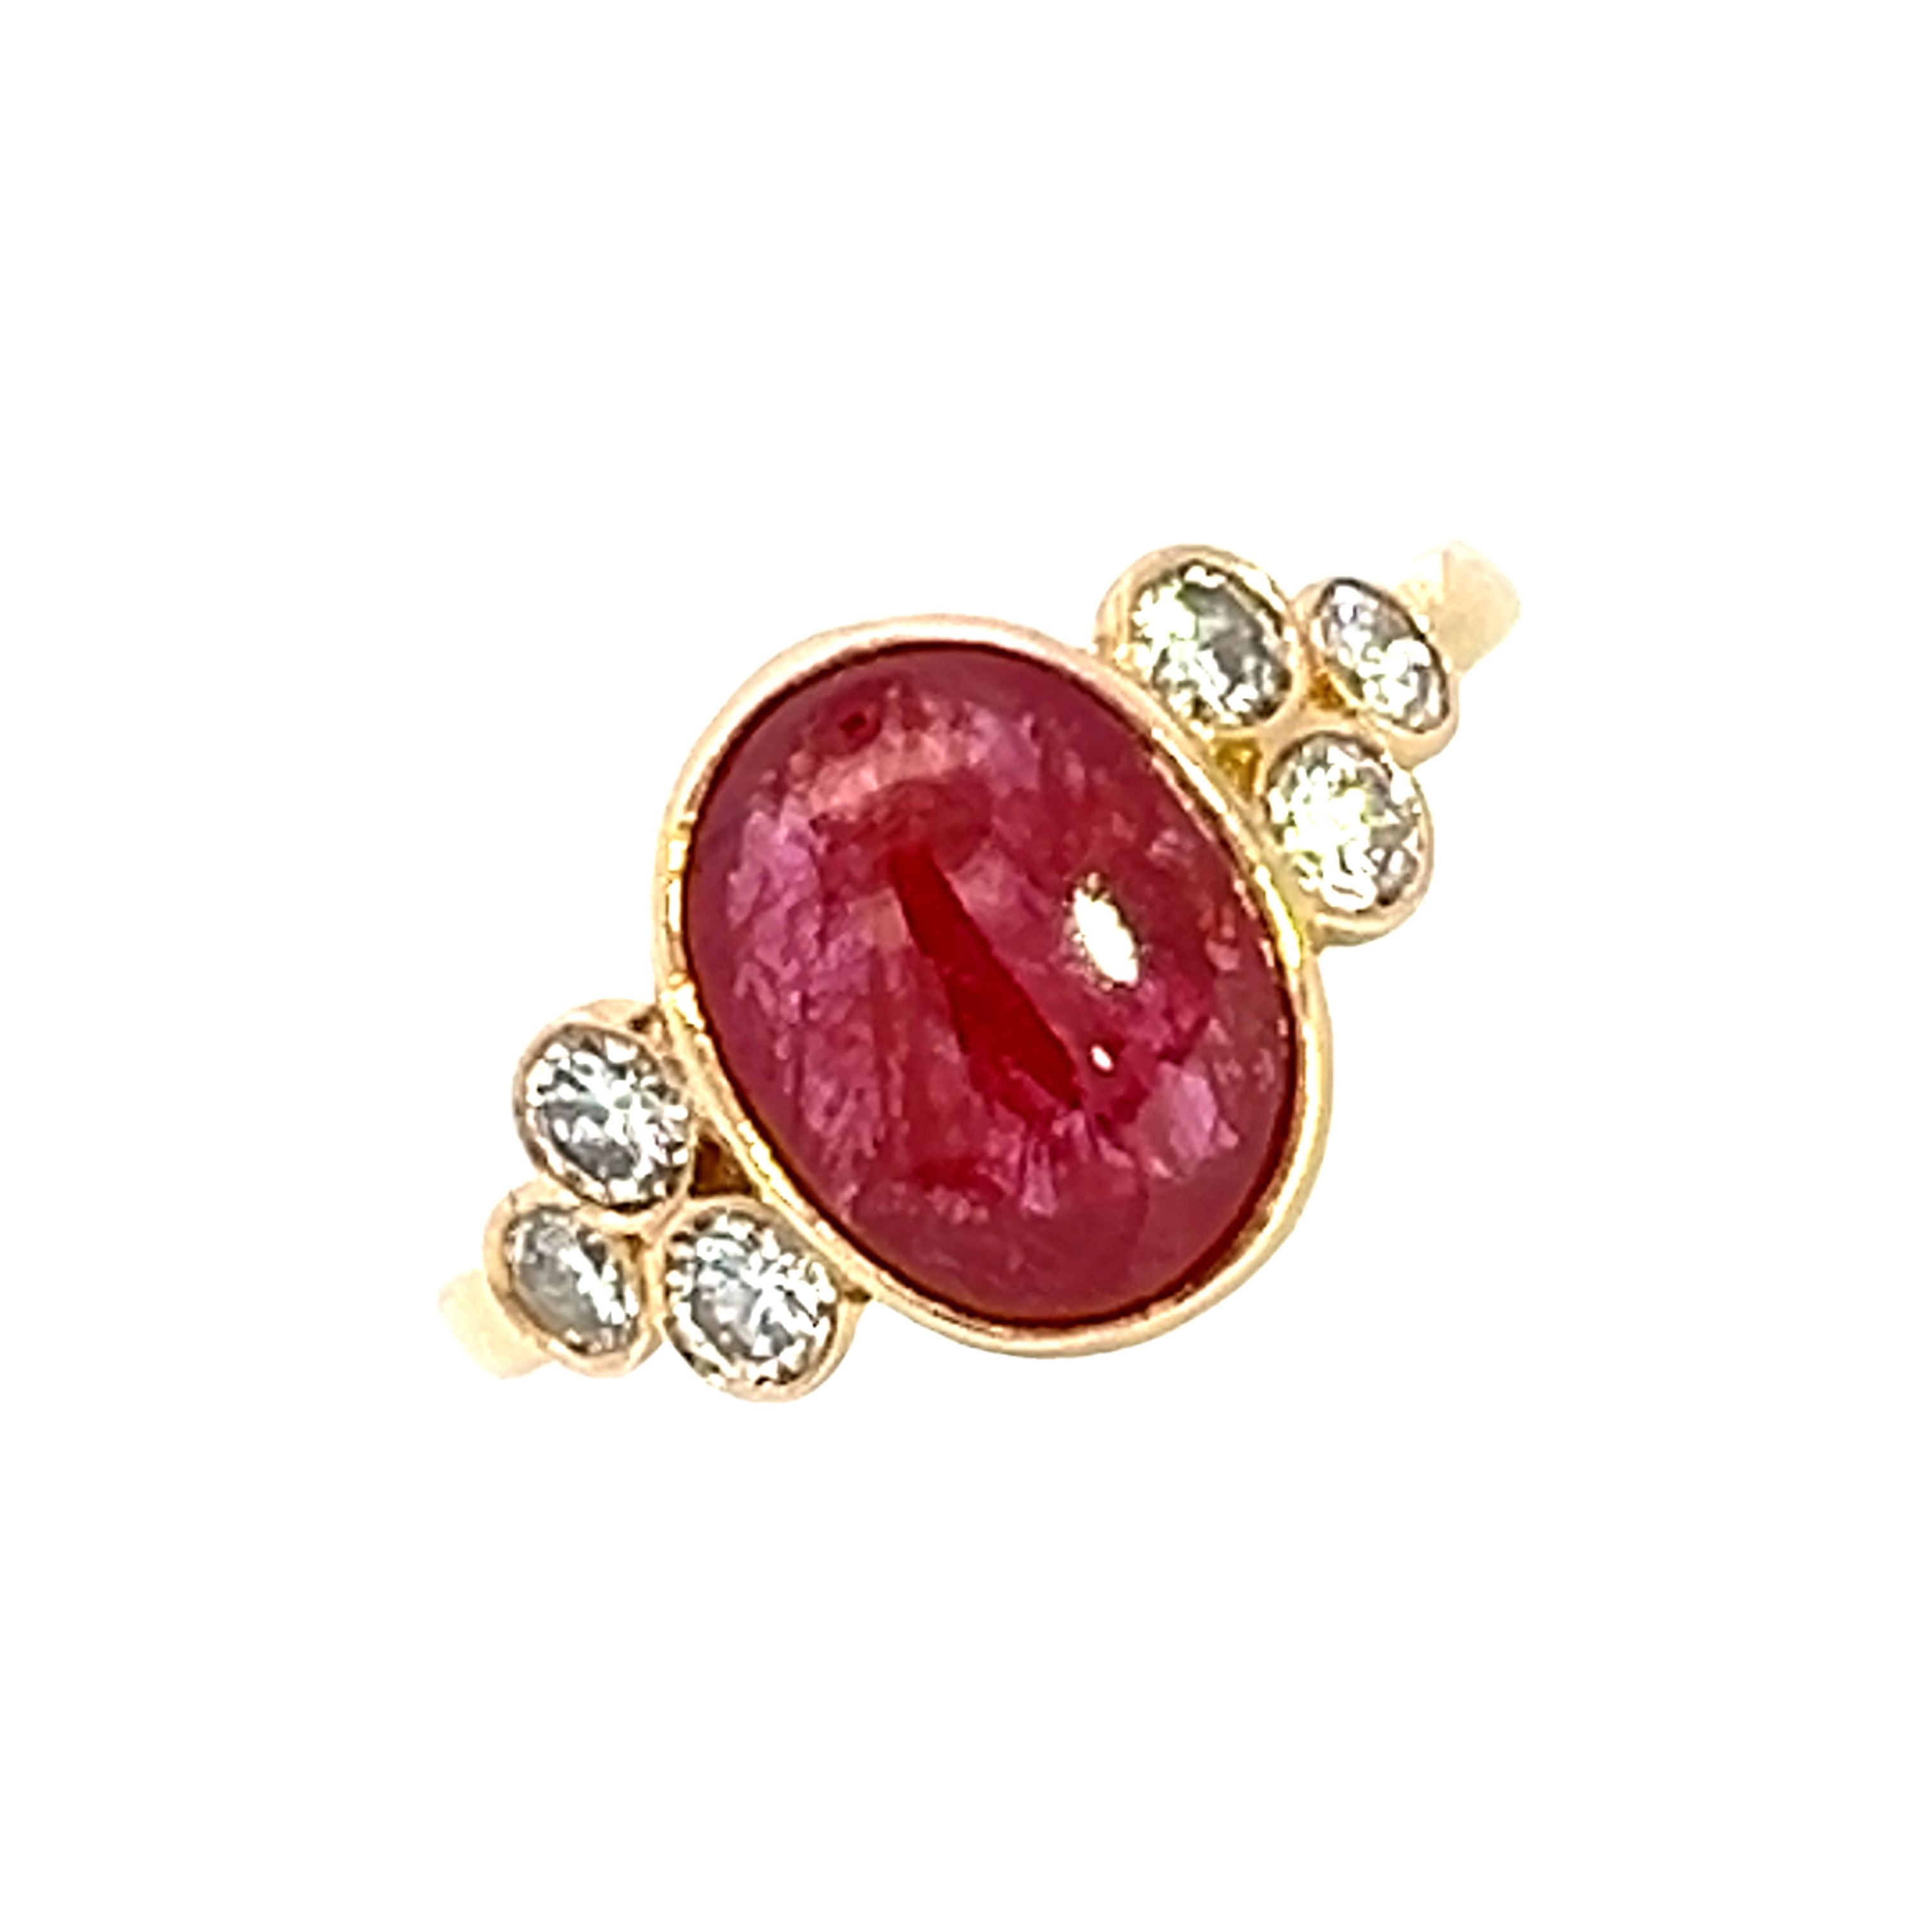 A Beautiful Cabochon Ruby Ring